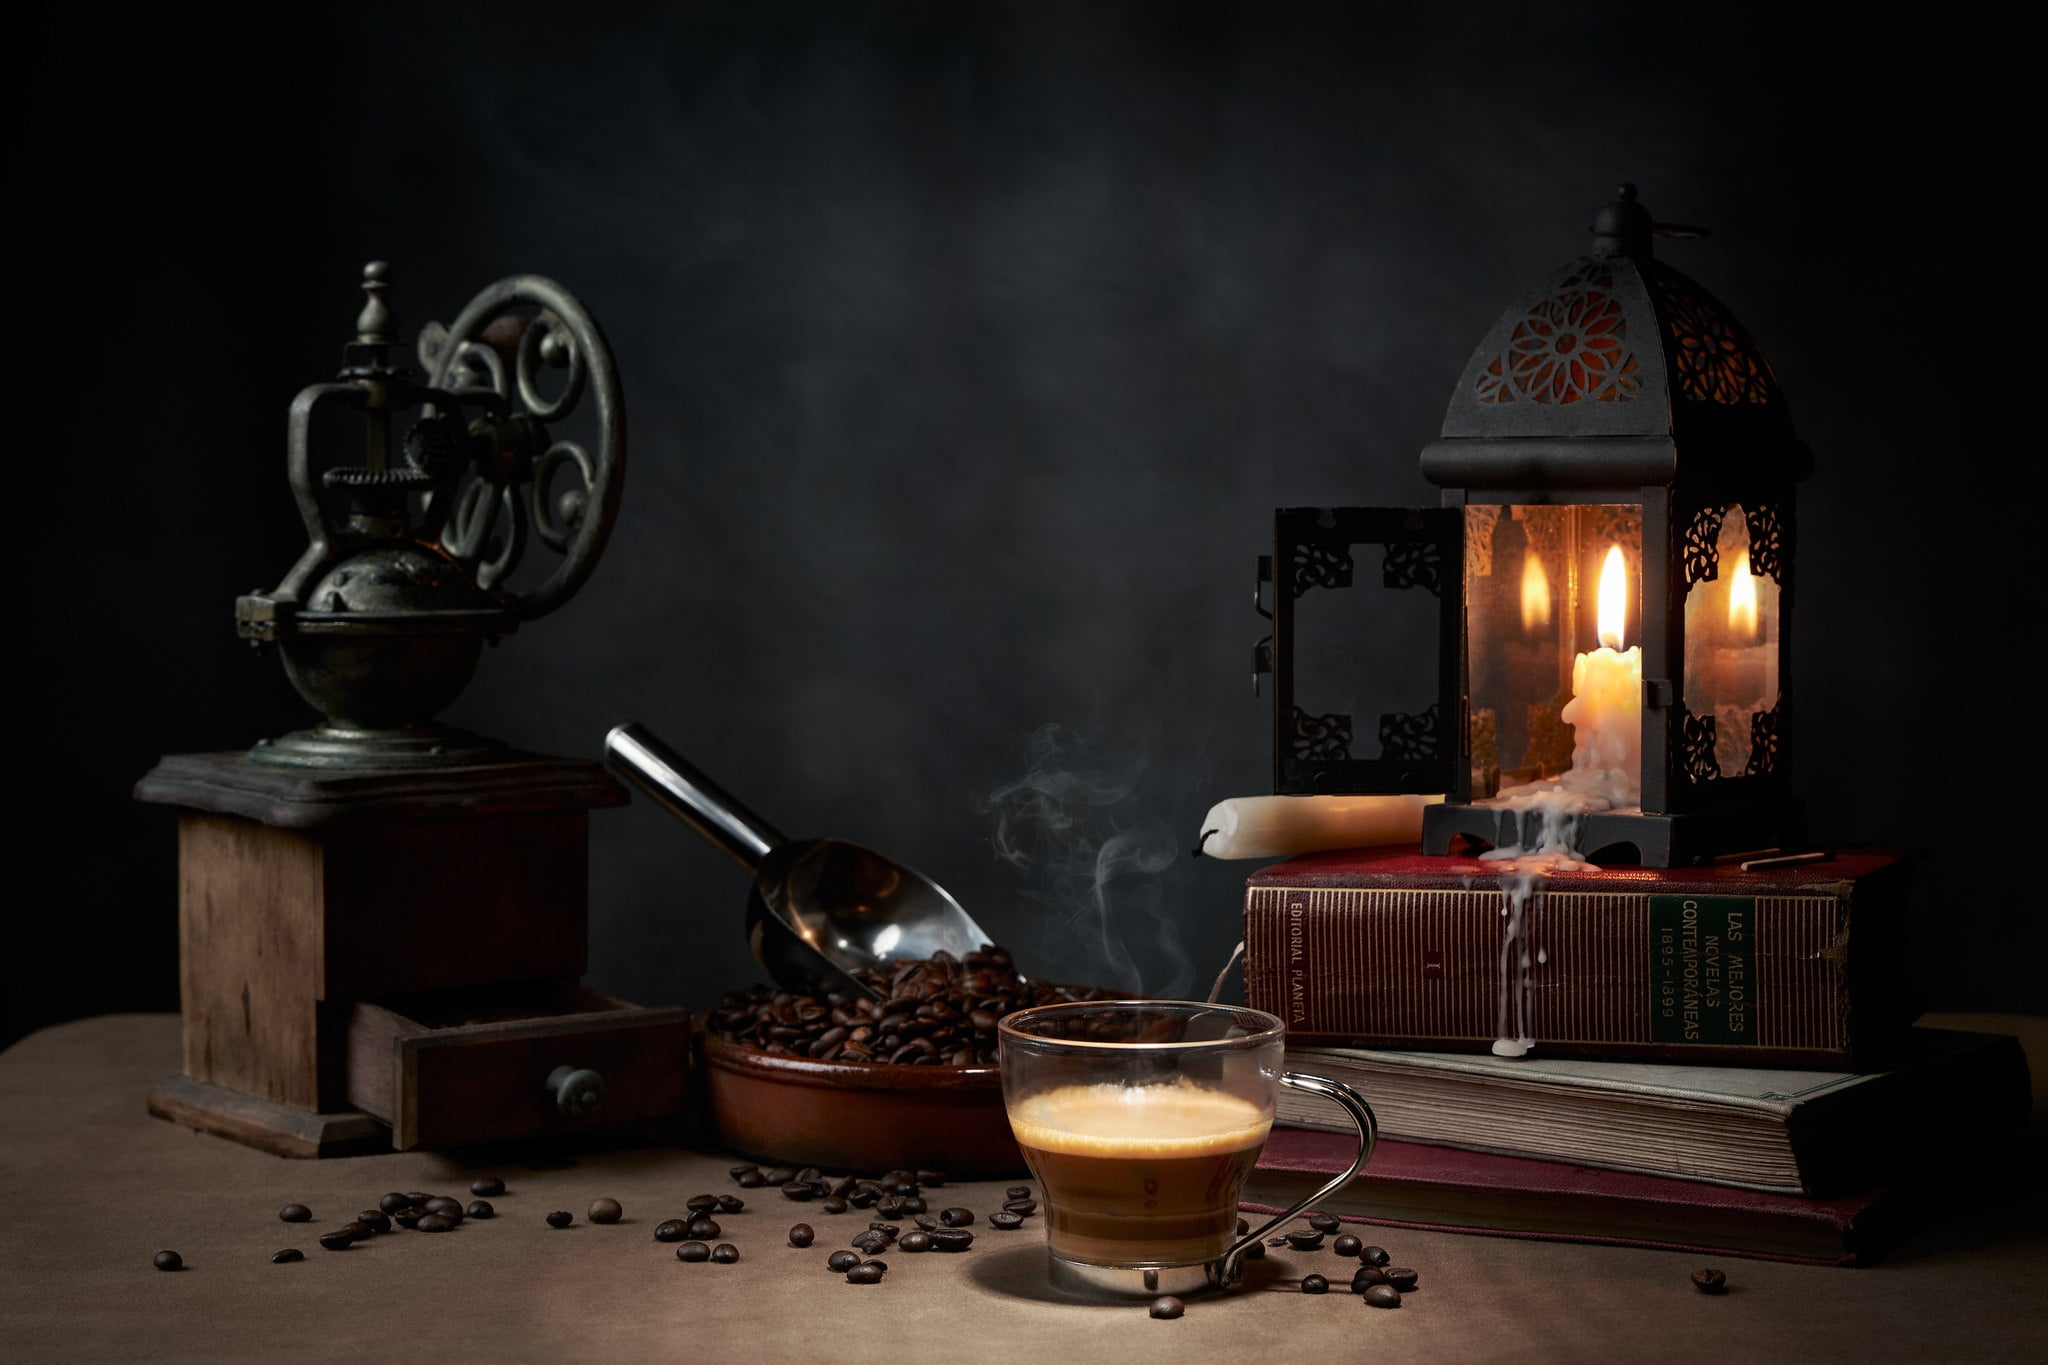 style, books, lamp, coffee, candles, mug, still life, coffee beans